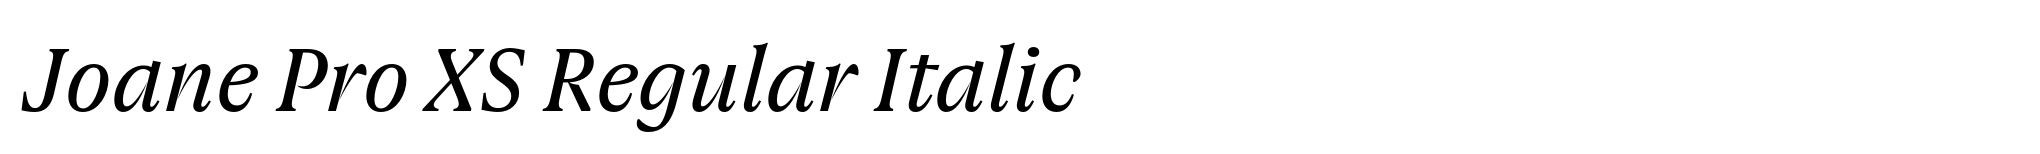 Joane Pro XS Regular Italic image